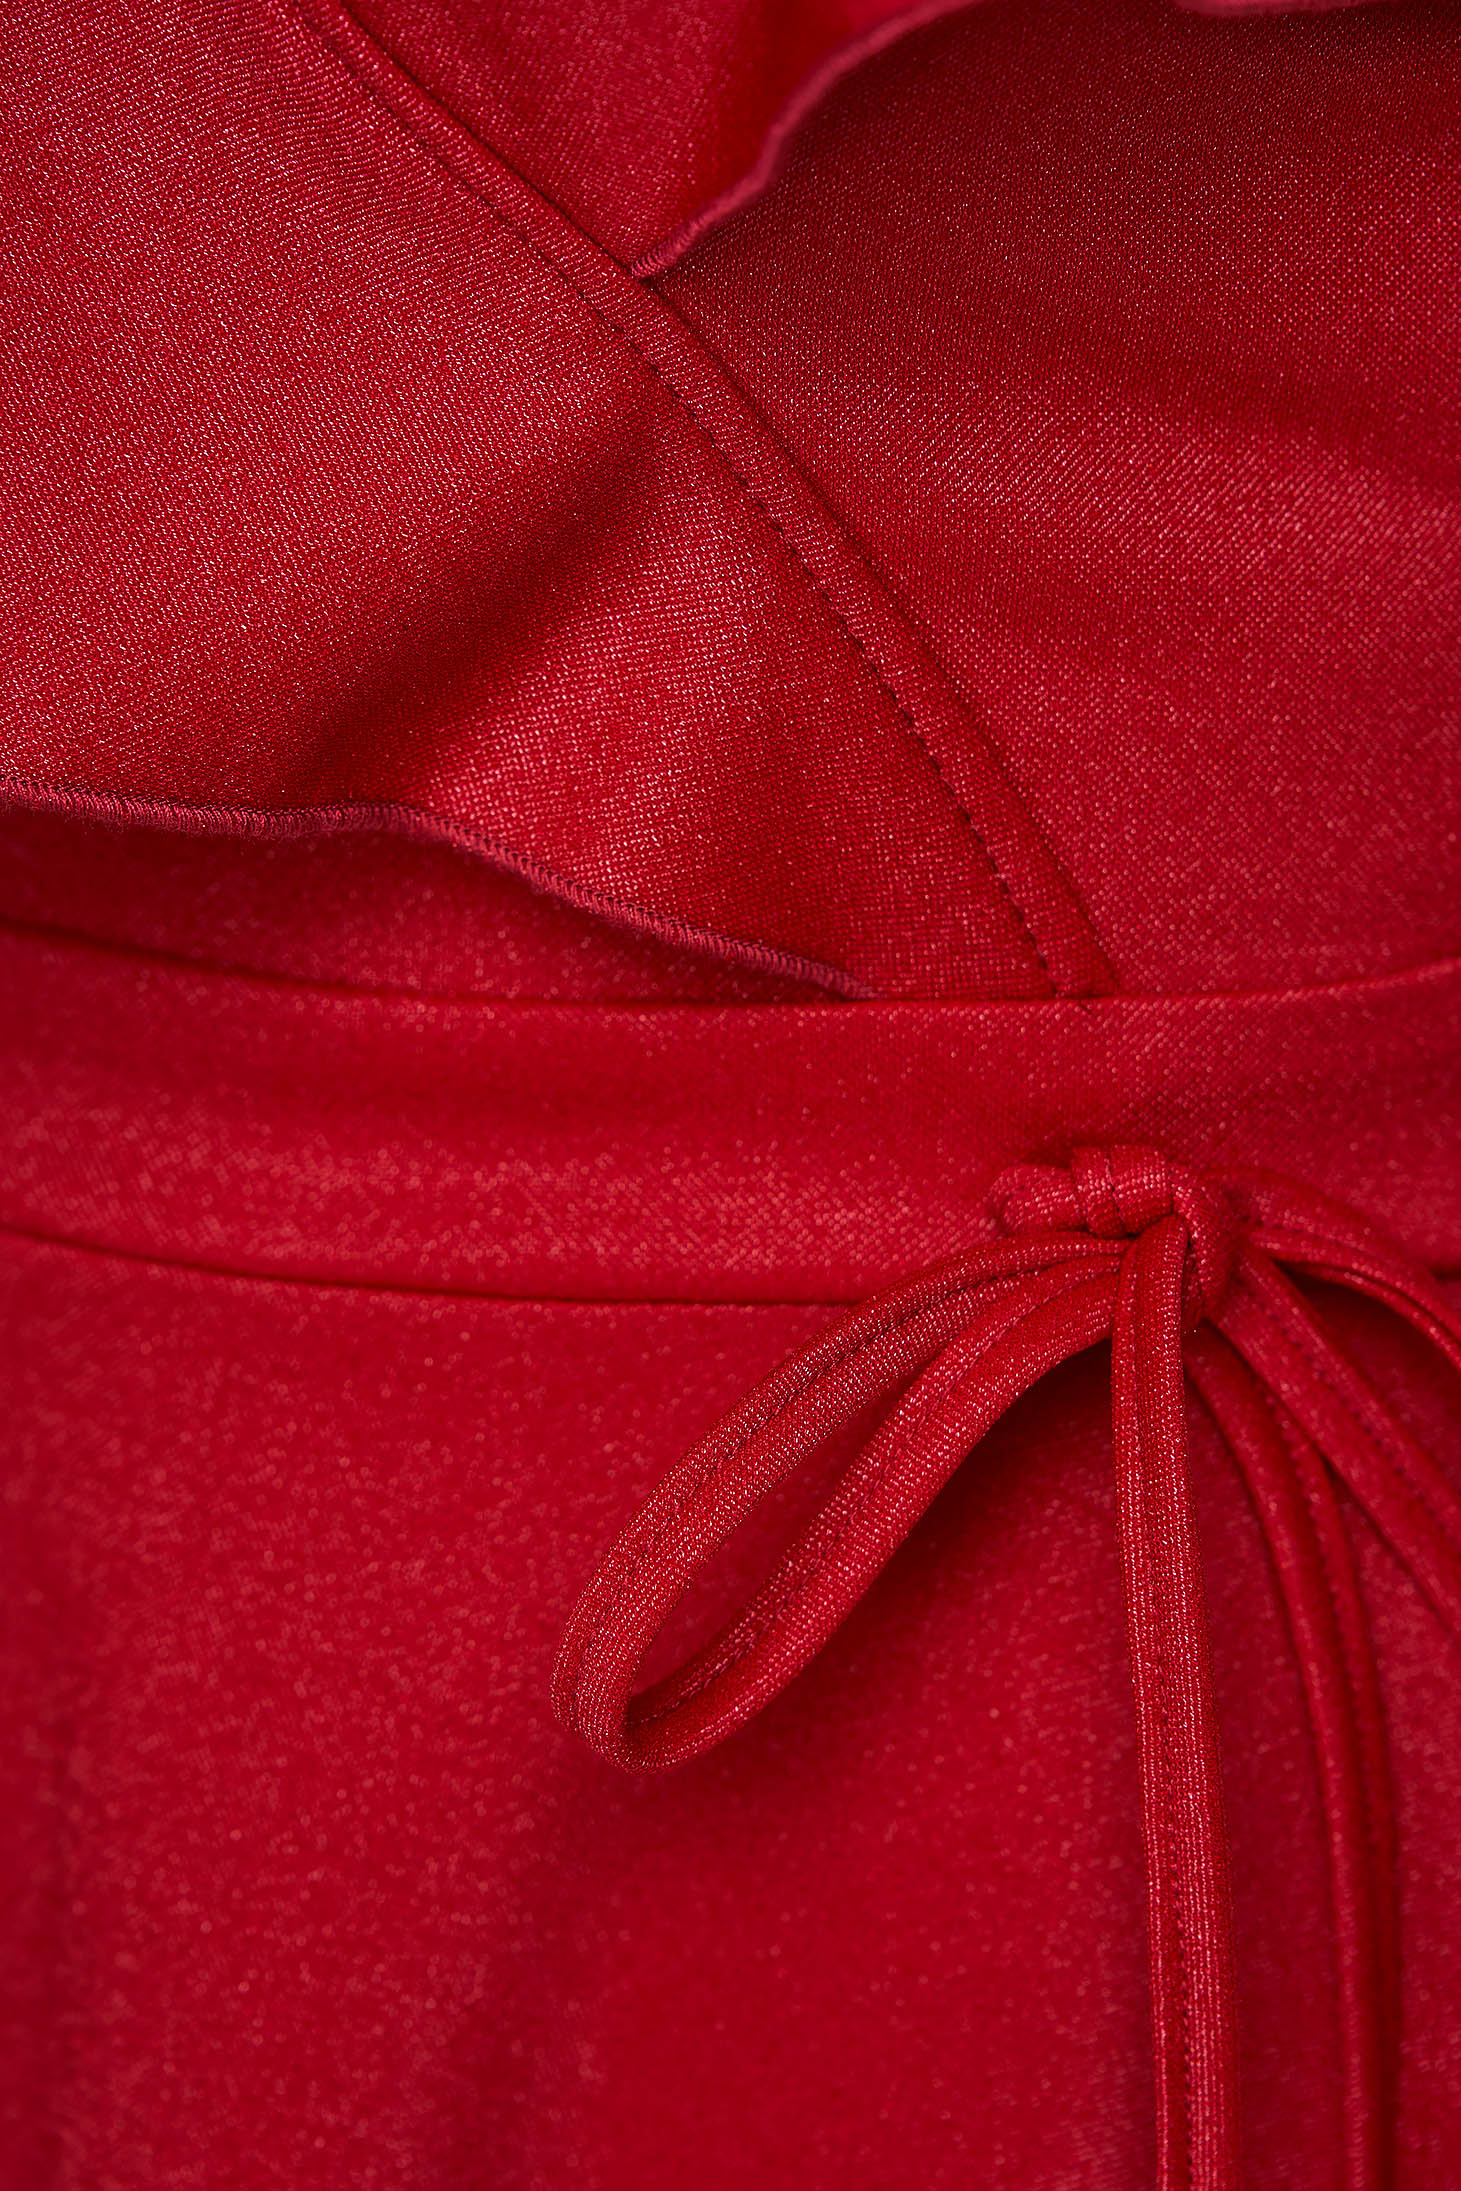 Rochie din crep rosie pana la genunchi in clos cu aplicatii cu sclipici - StarShinerS 6 - StarShinerS.ro